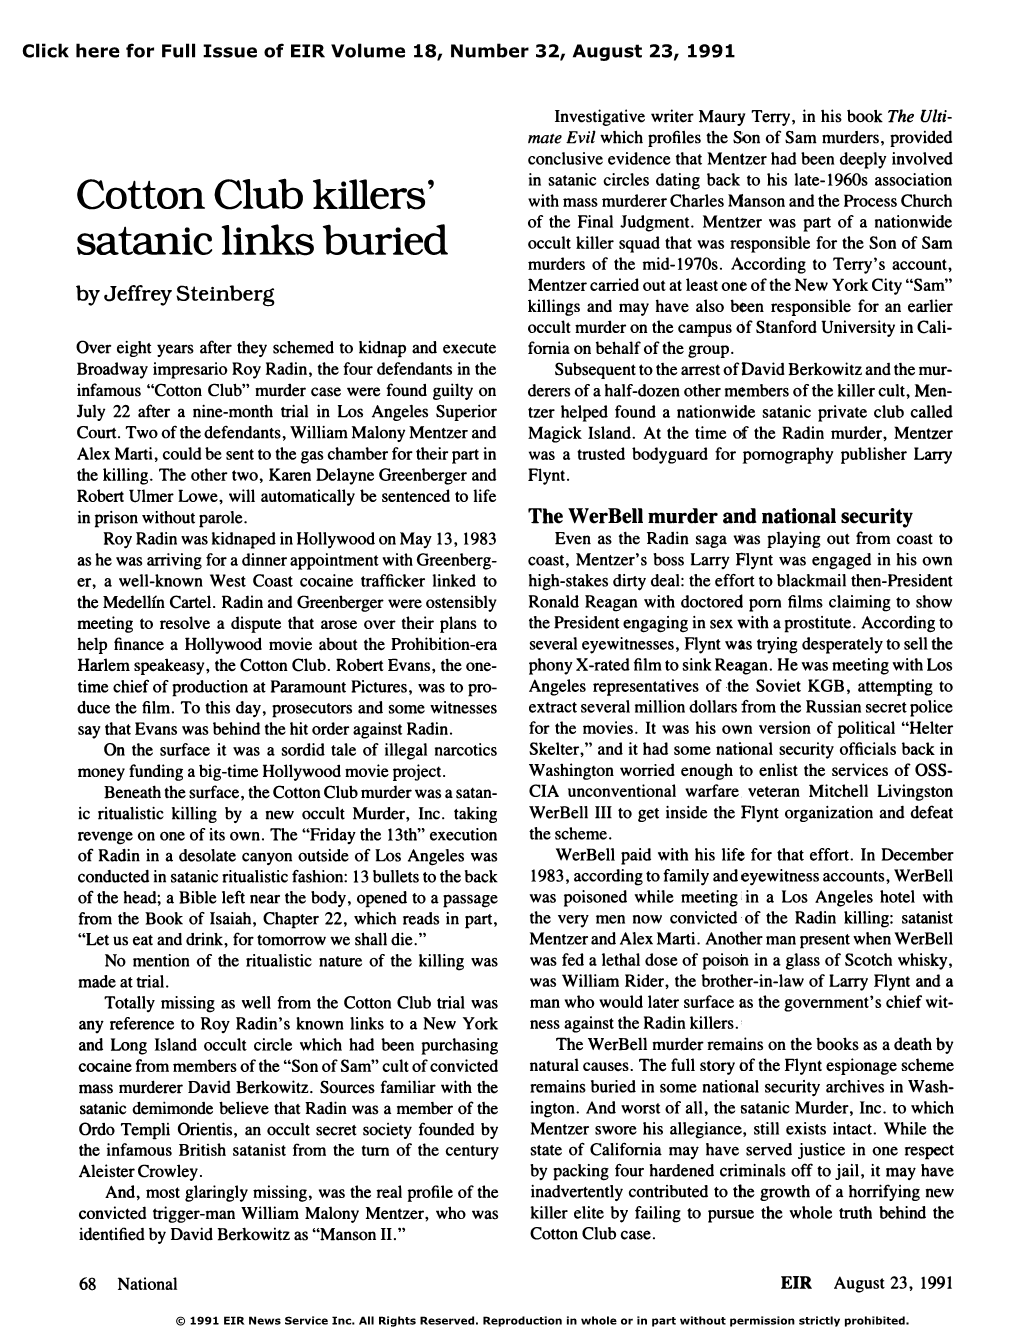 Cotton Club Killers' Satanic Links Buried